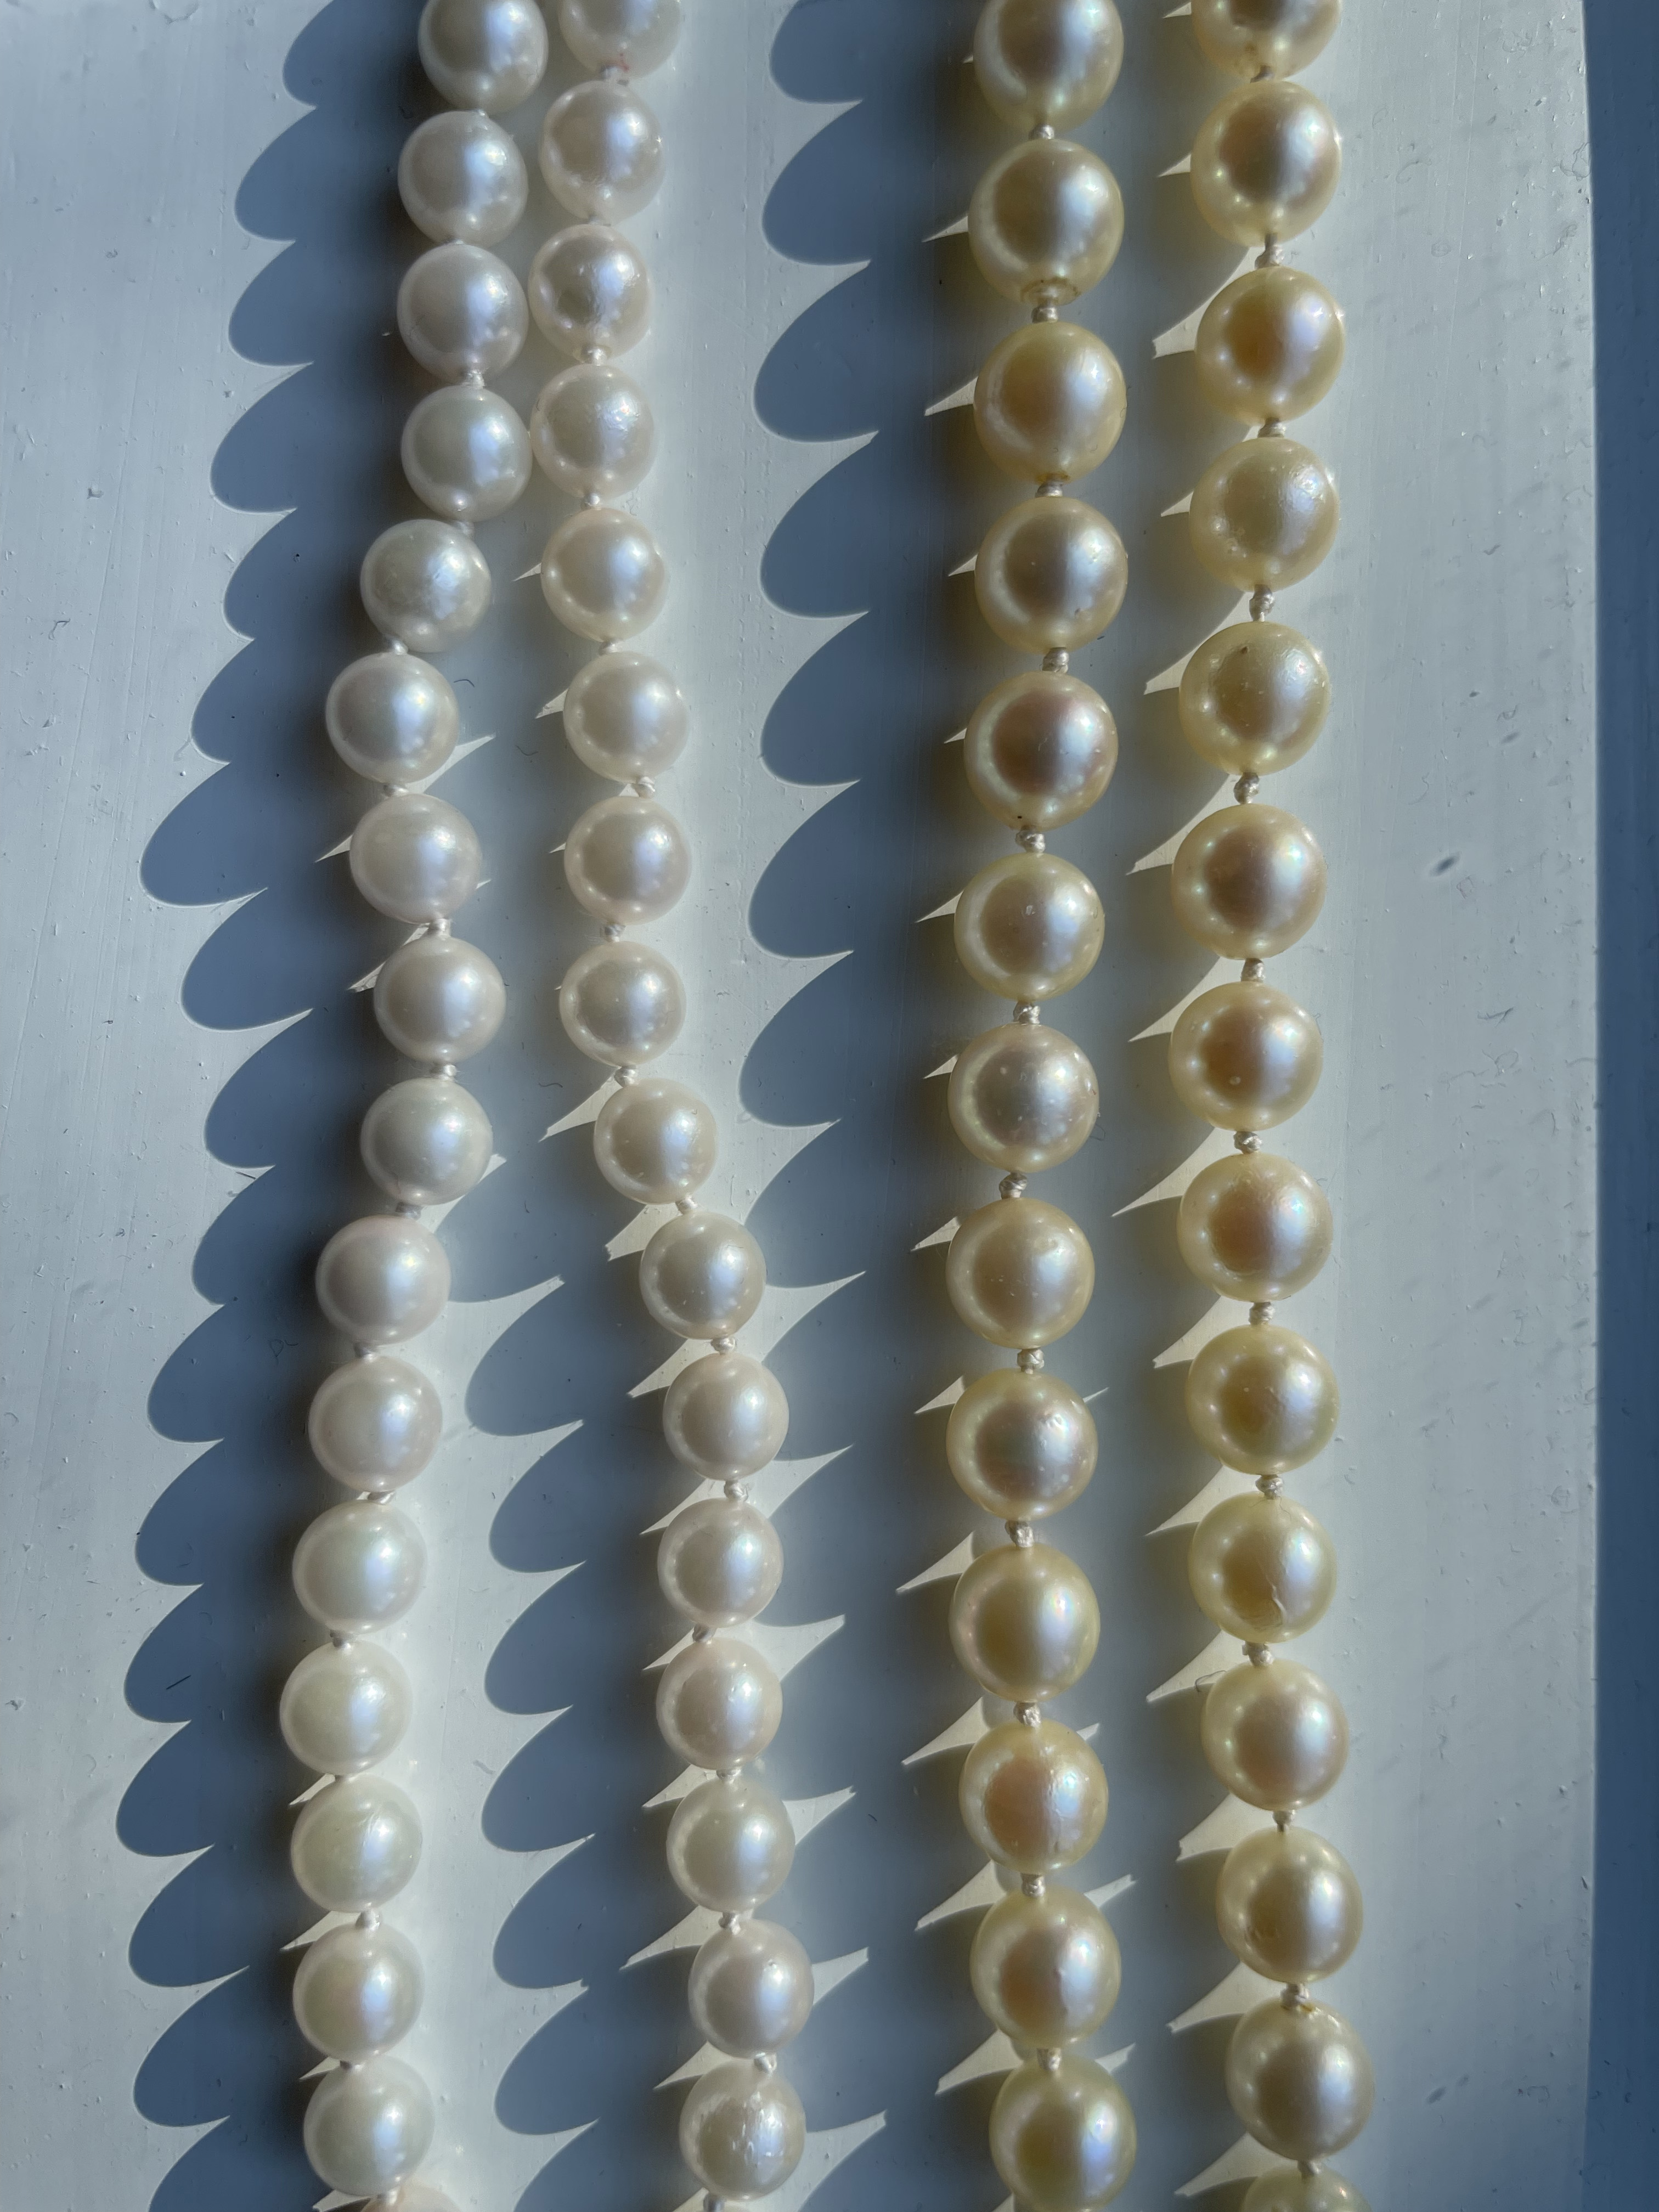 pearl identification help